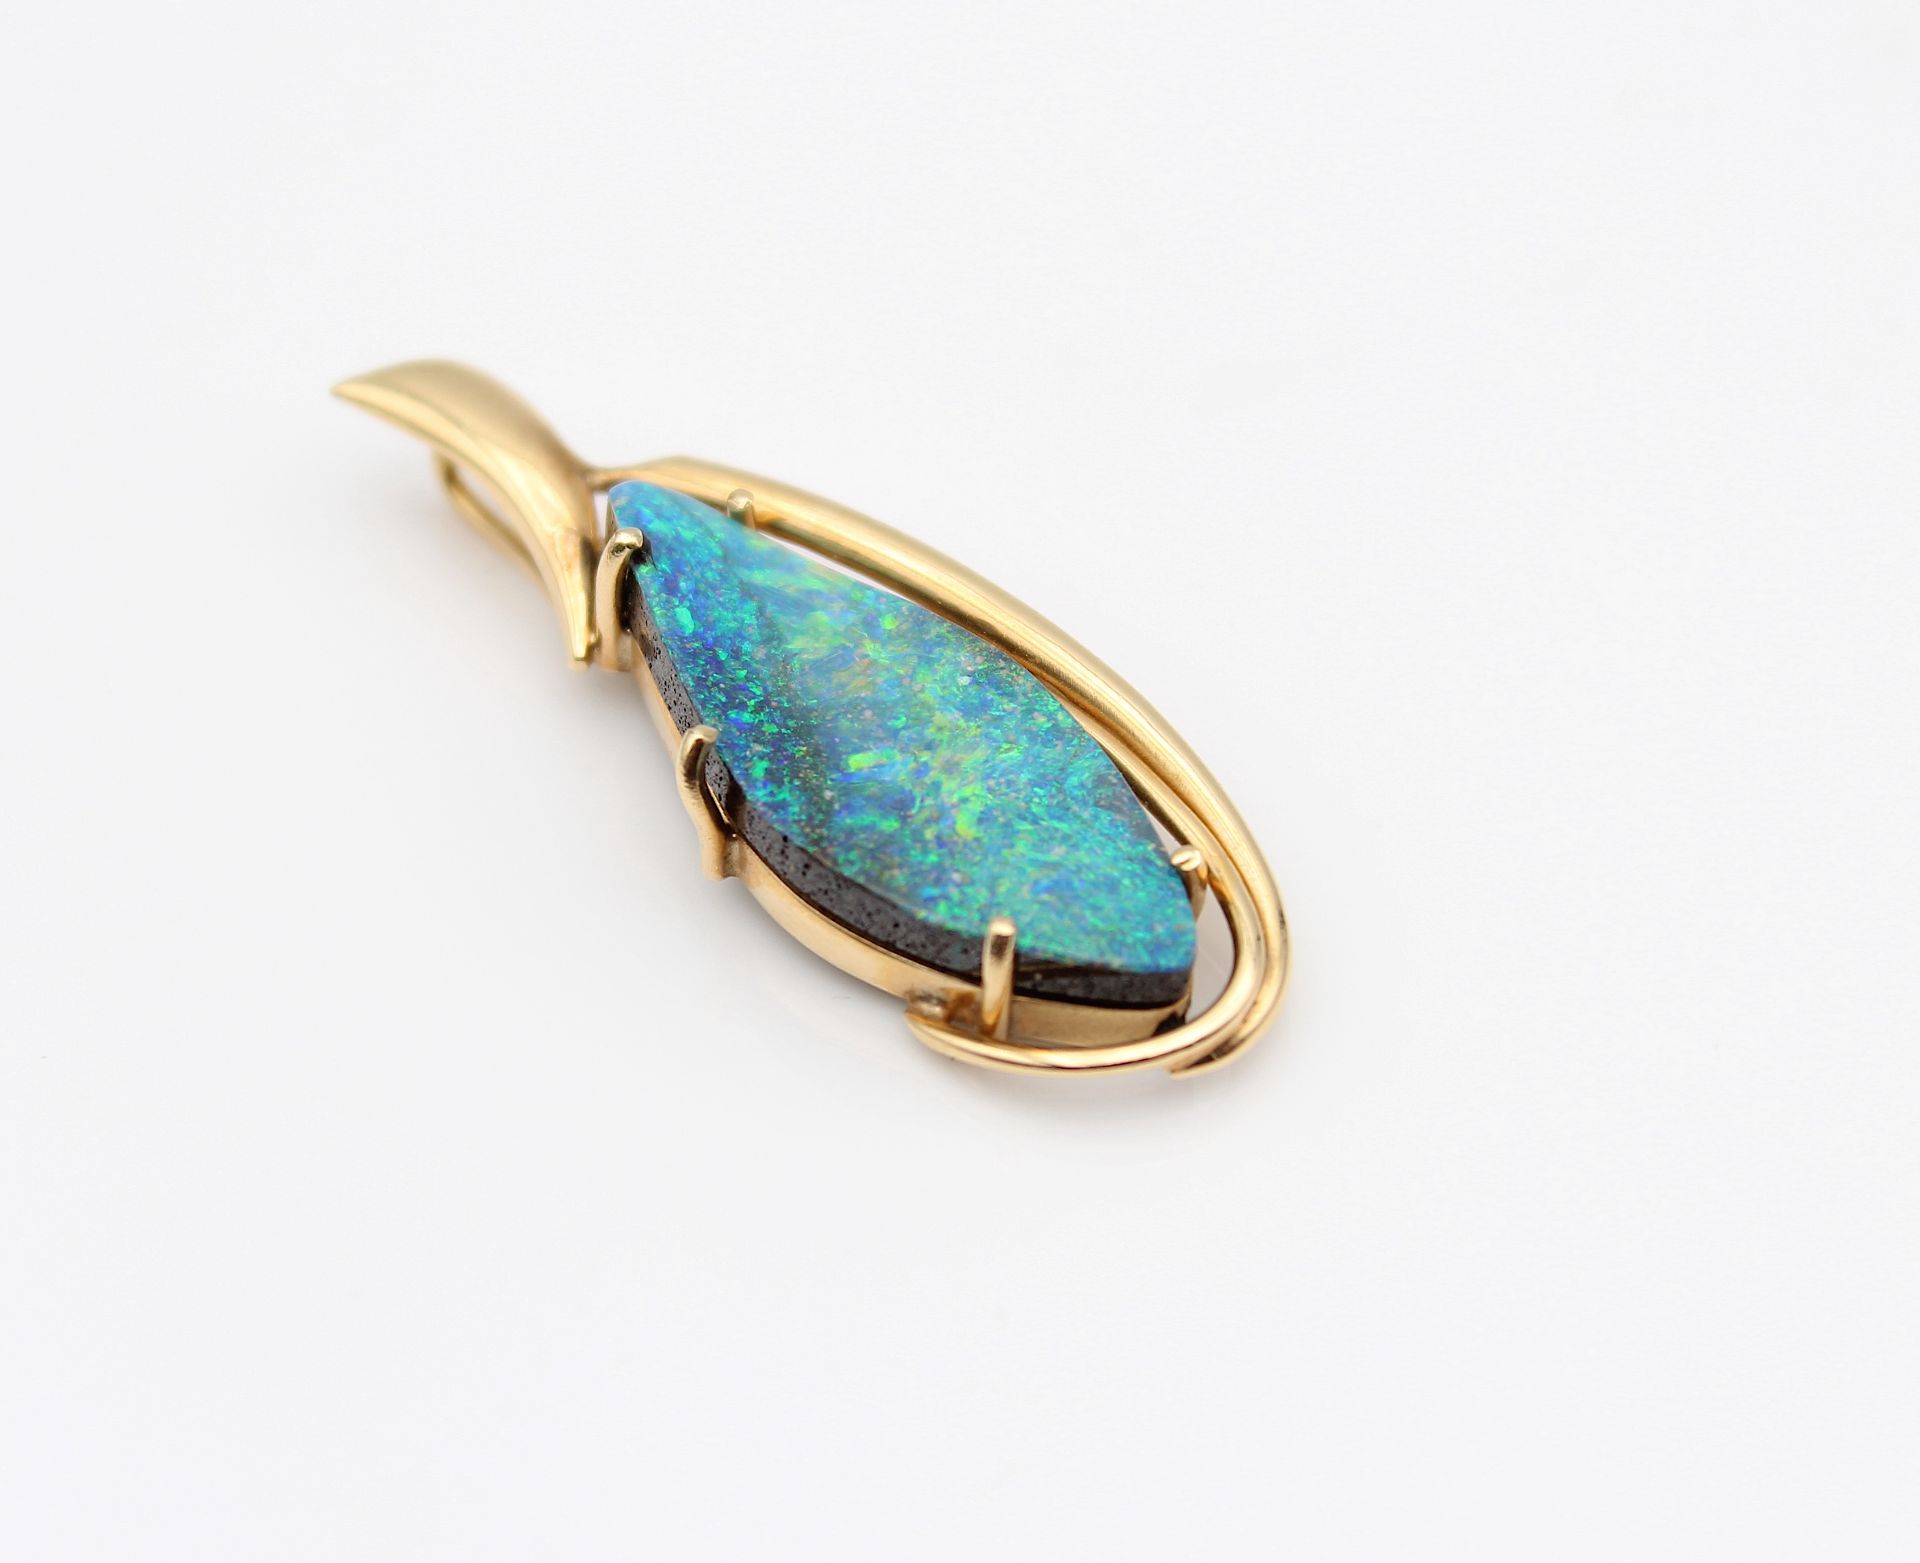 Great boulder opal pendant